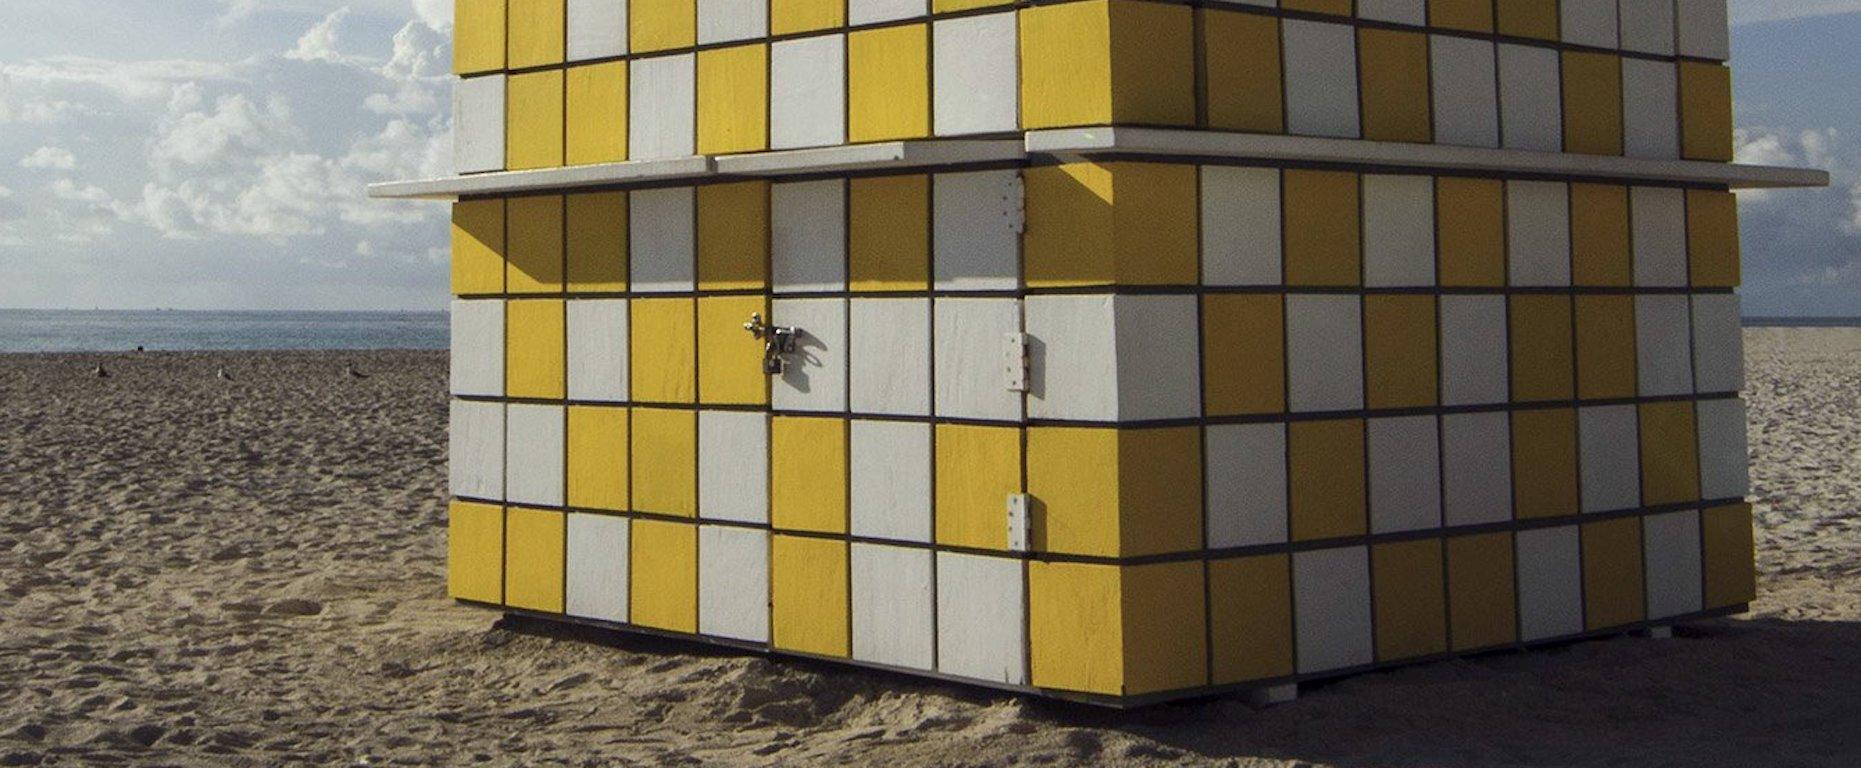 Rubik's Cube. Architektonische Farbfotografie in limitierter Auflage (Grau), Color Photograph, von Juan Pablo Castro